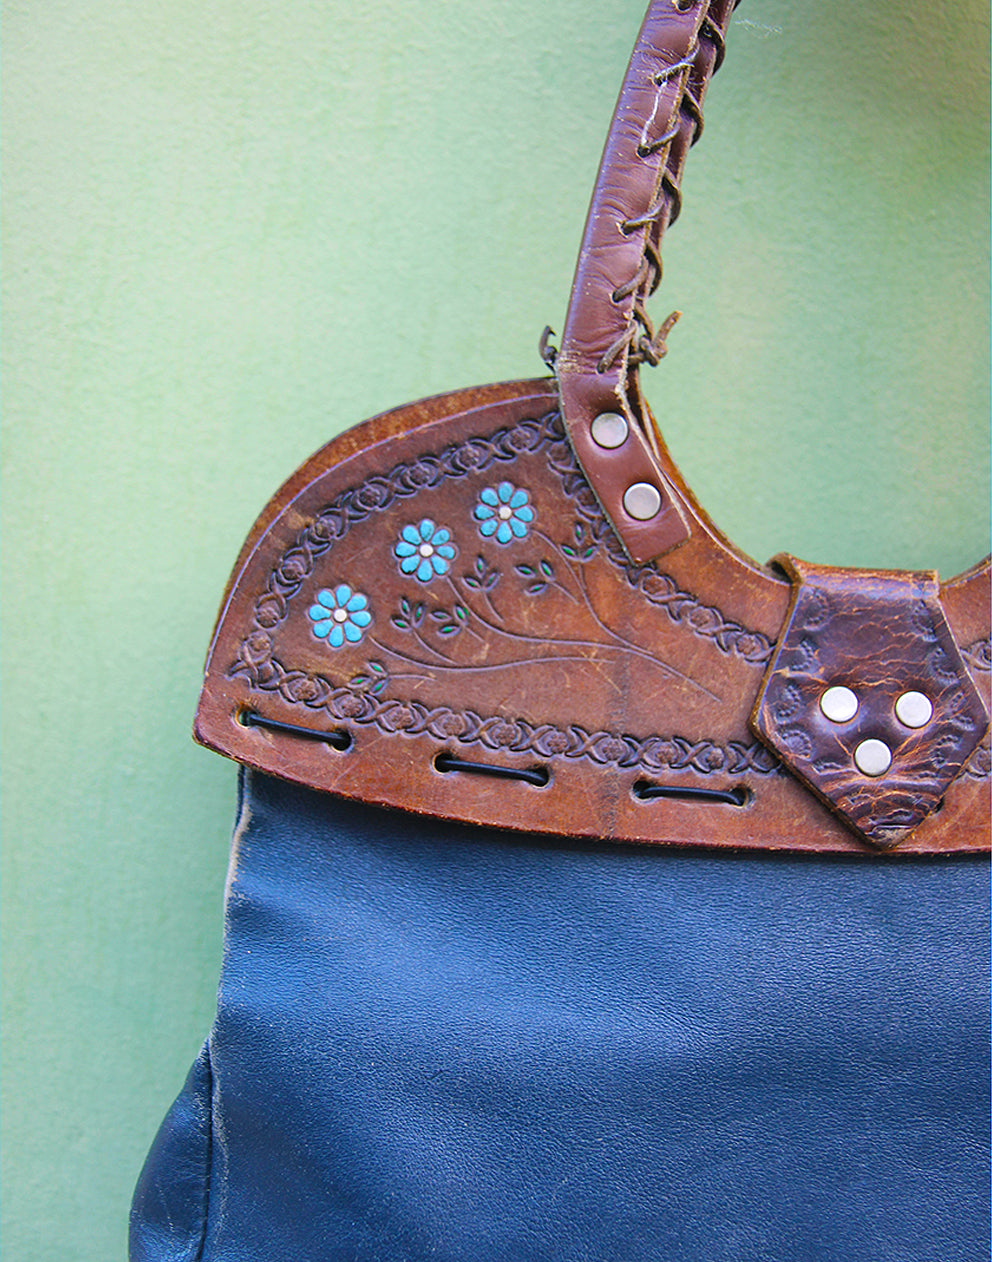 Leather Handbag in Tan & Blue